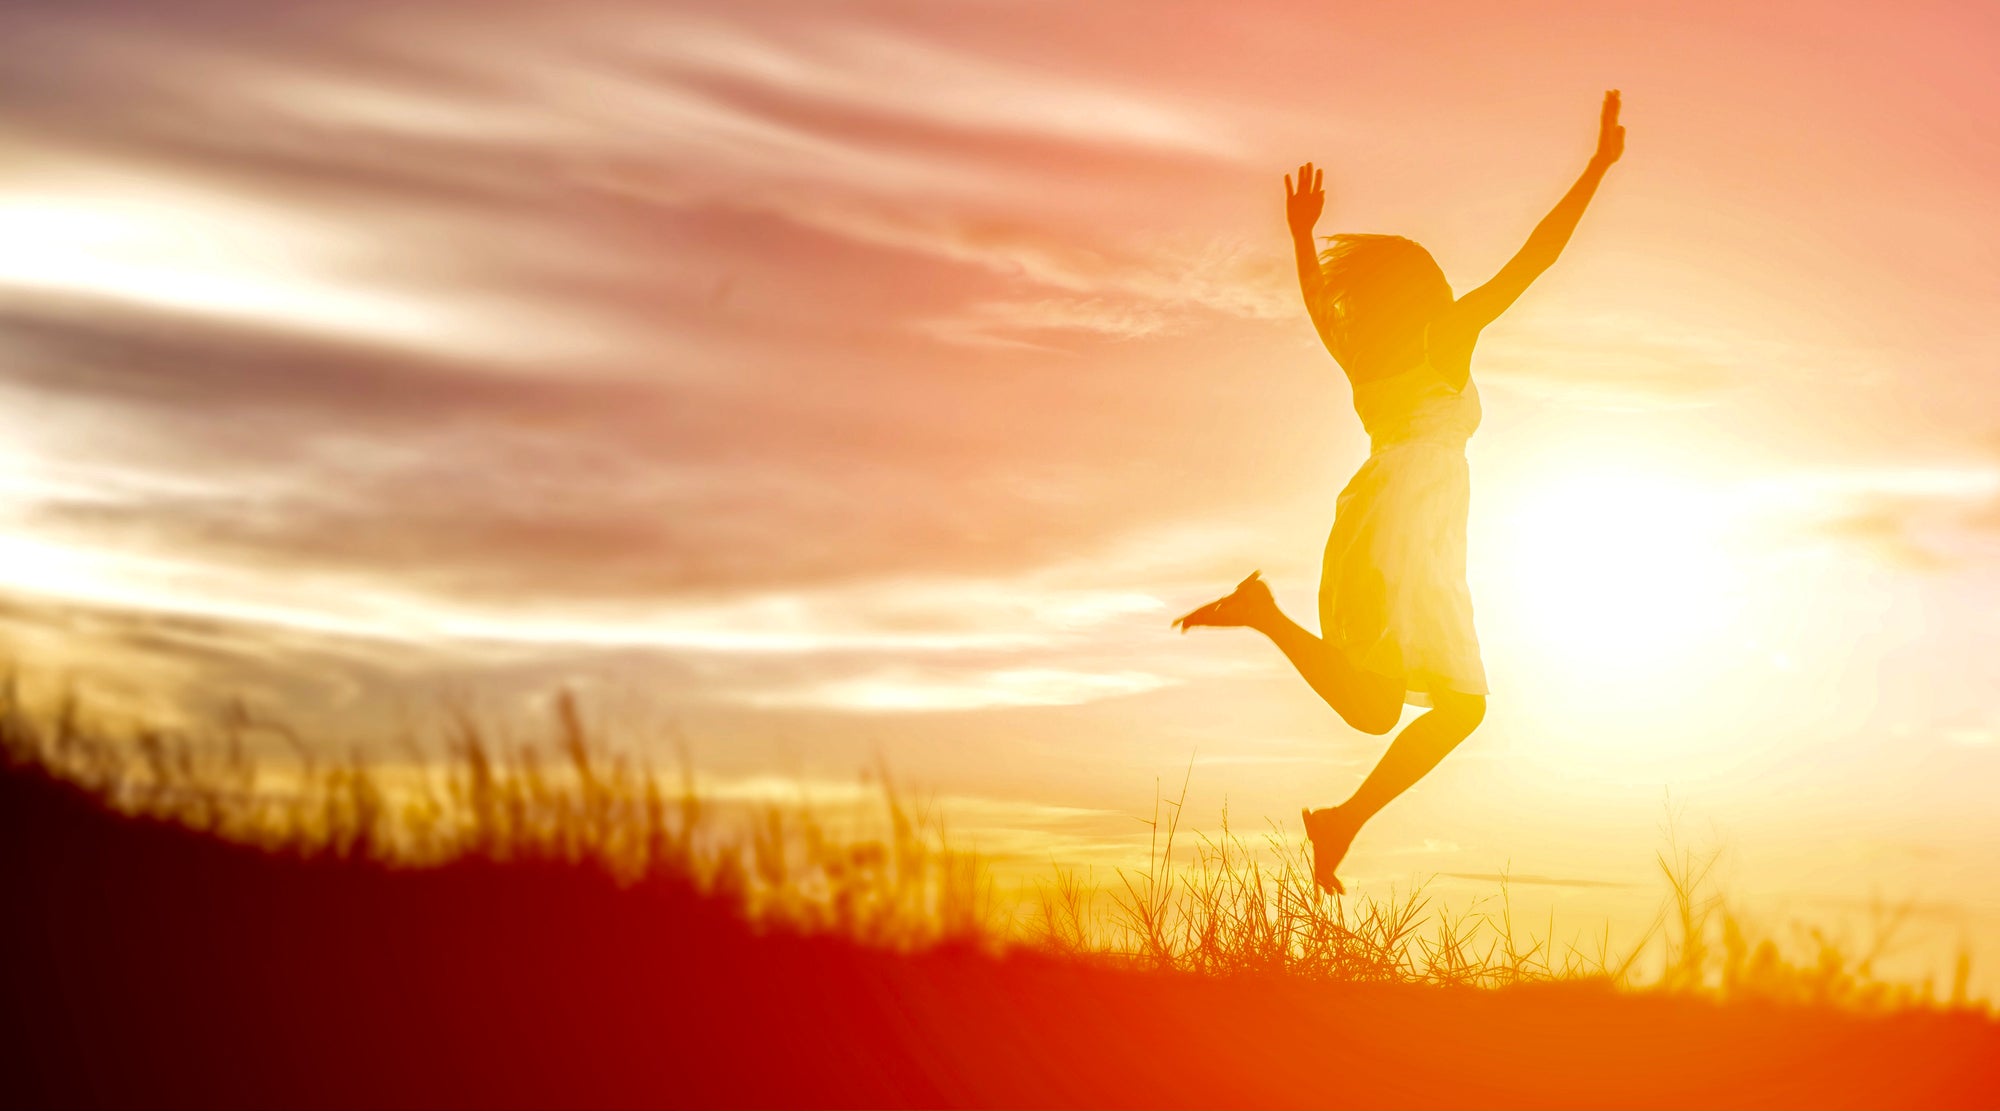 15 Ways to Find Everyday Joy